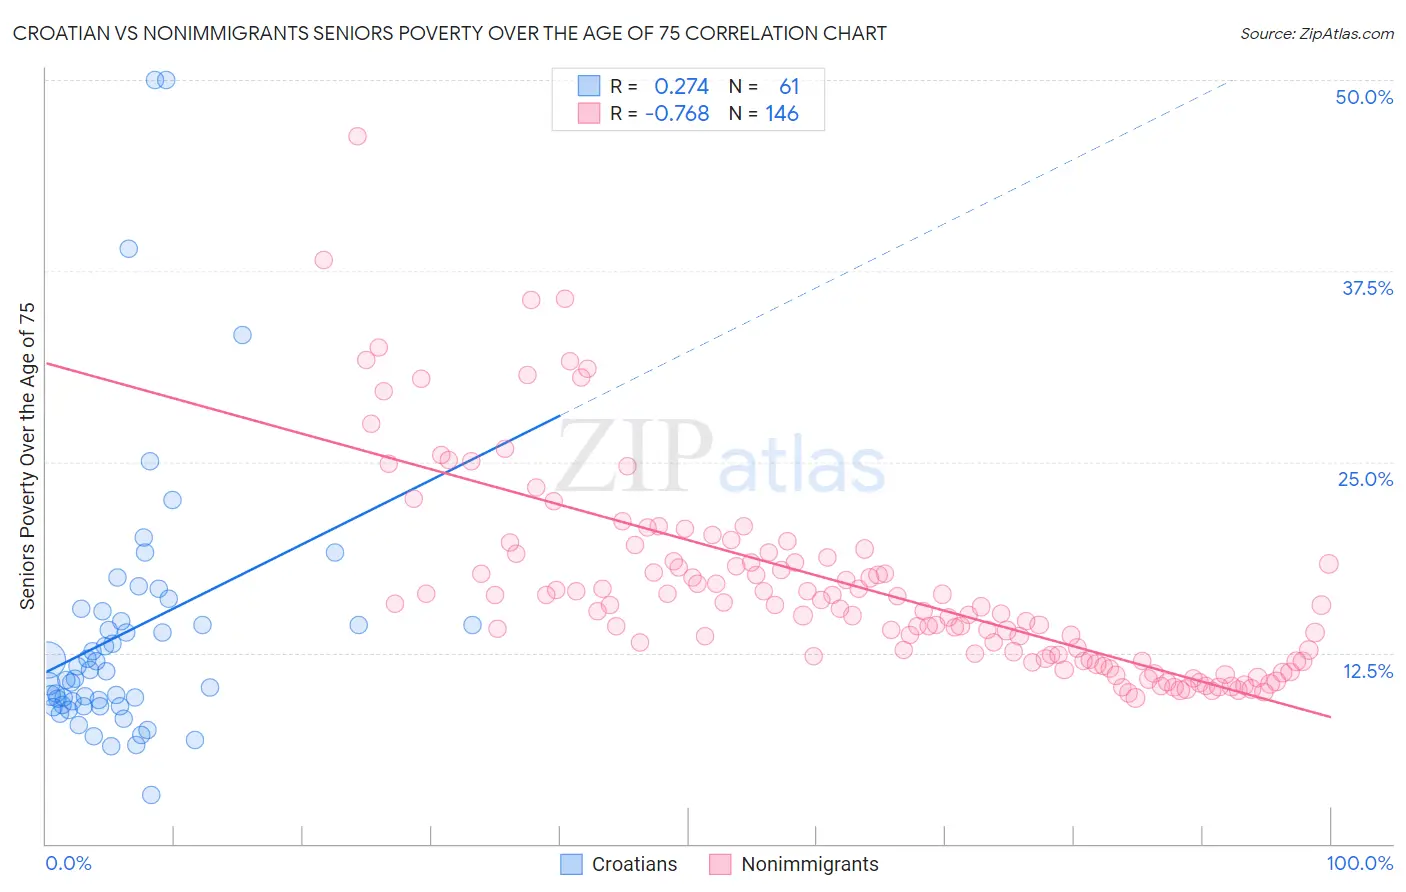 Croatian vs Nonimmigrants Seniors Poverty Over the Age of 75